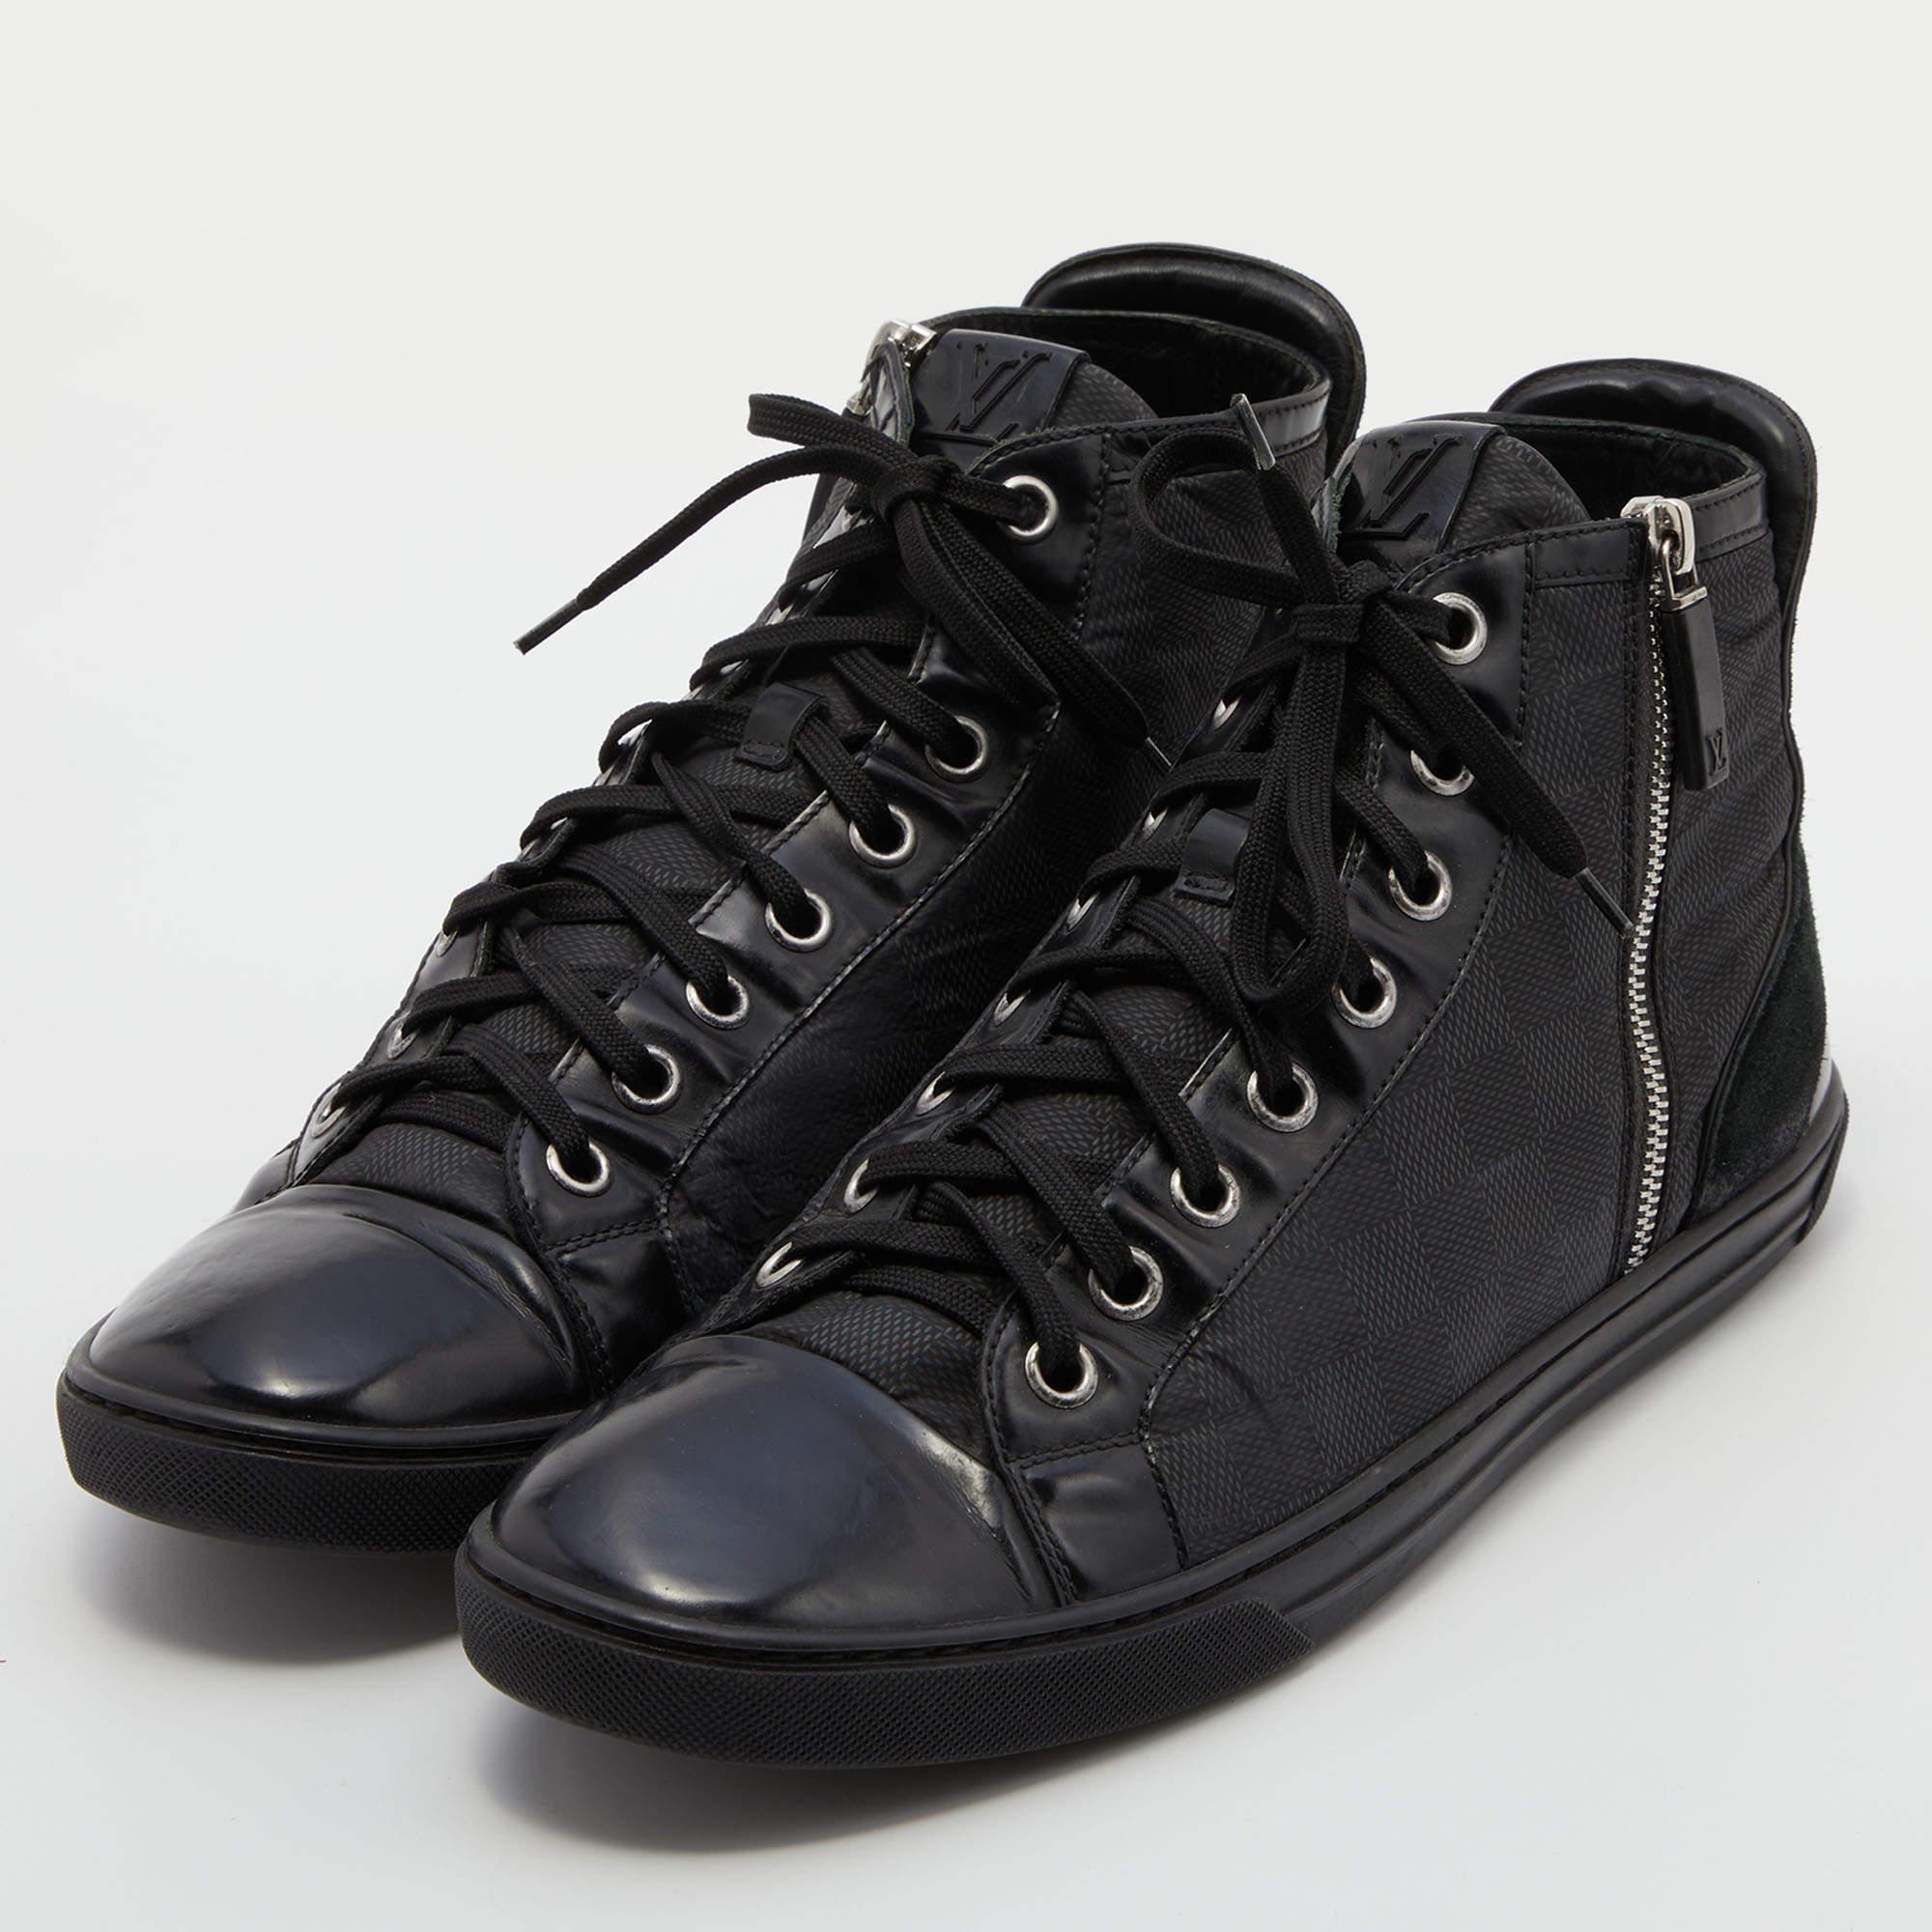 Men's Louis Vuitton Black/Grey Damier Graphite Lace Up High Top Sneakers Size 44